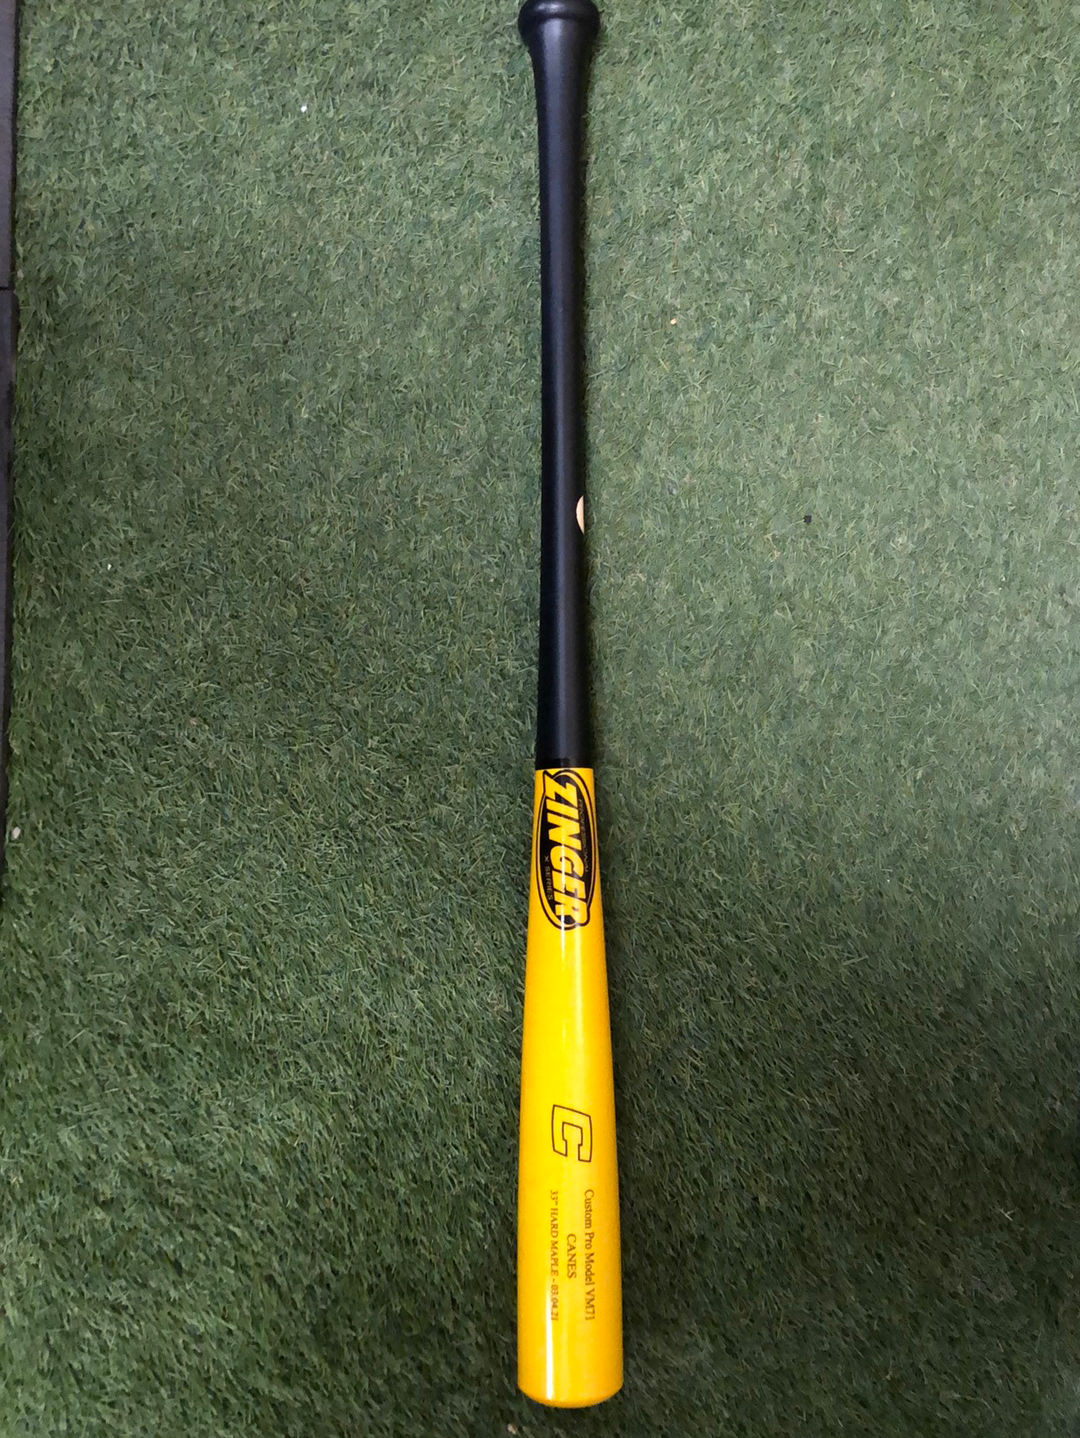 Canes West Zinger Model VM71 Custom Pro Model Wood Bat